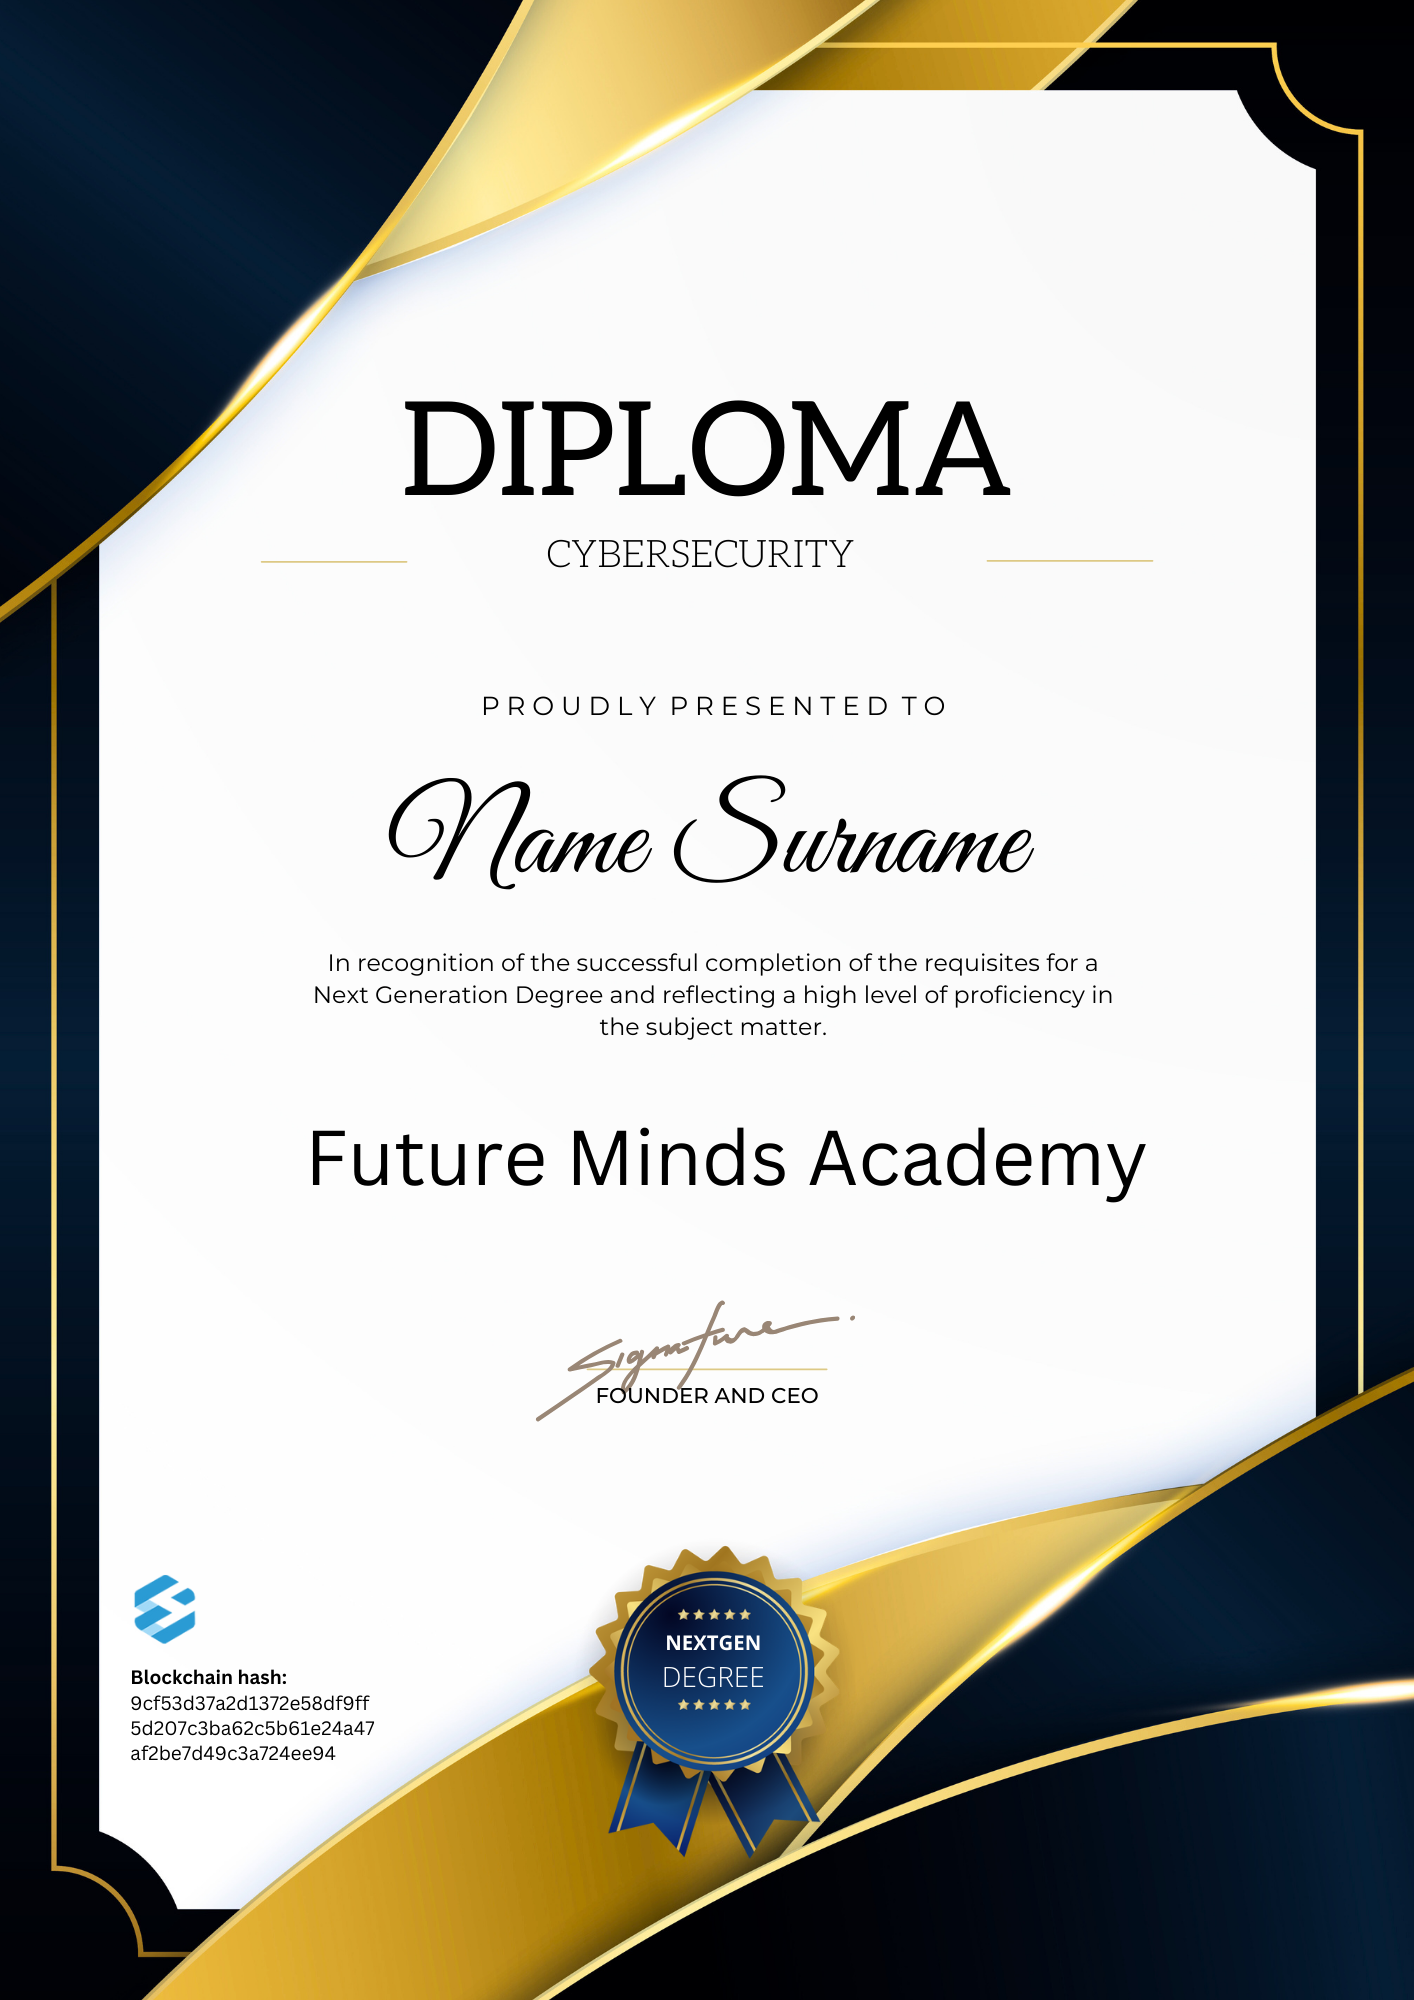 Diploma Cybersecurity